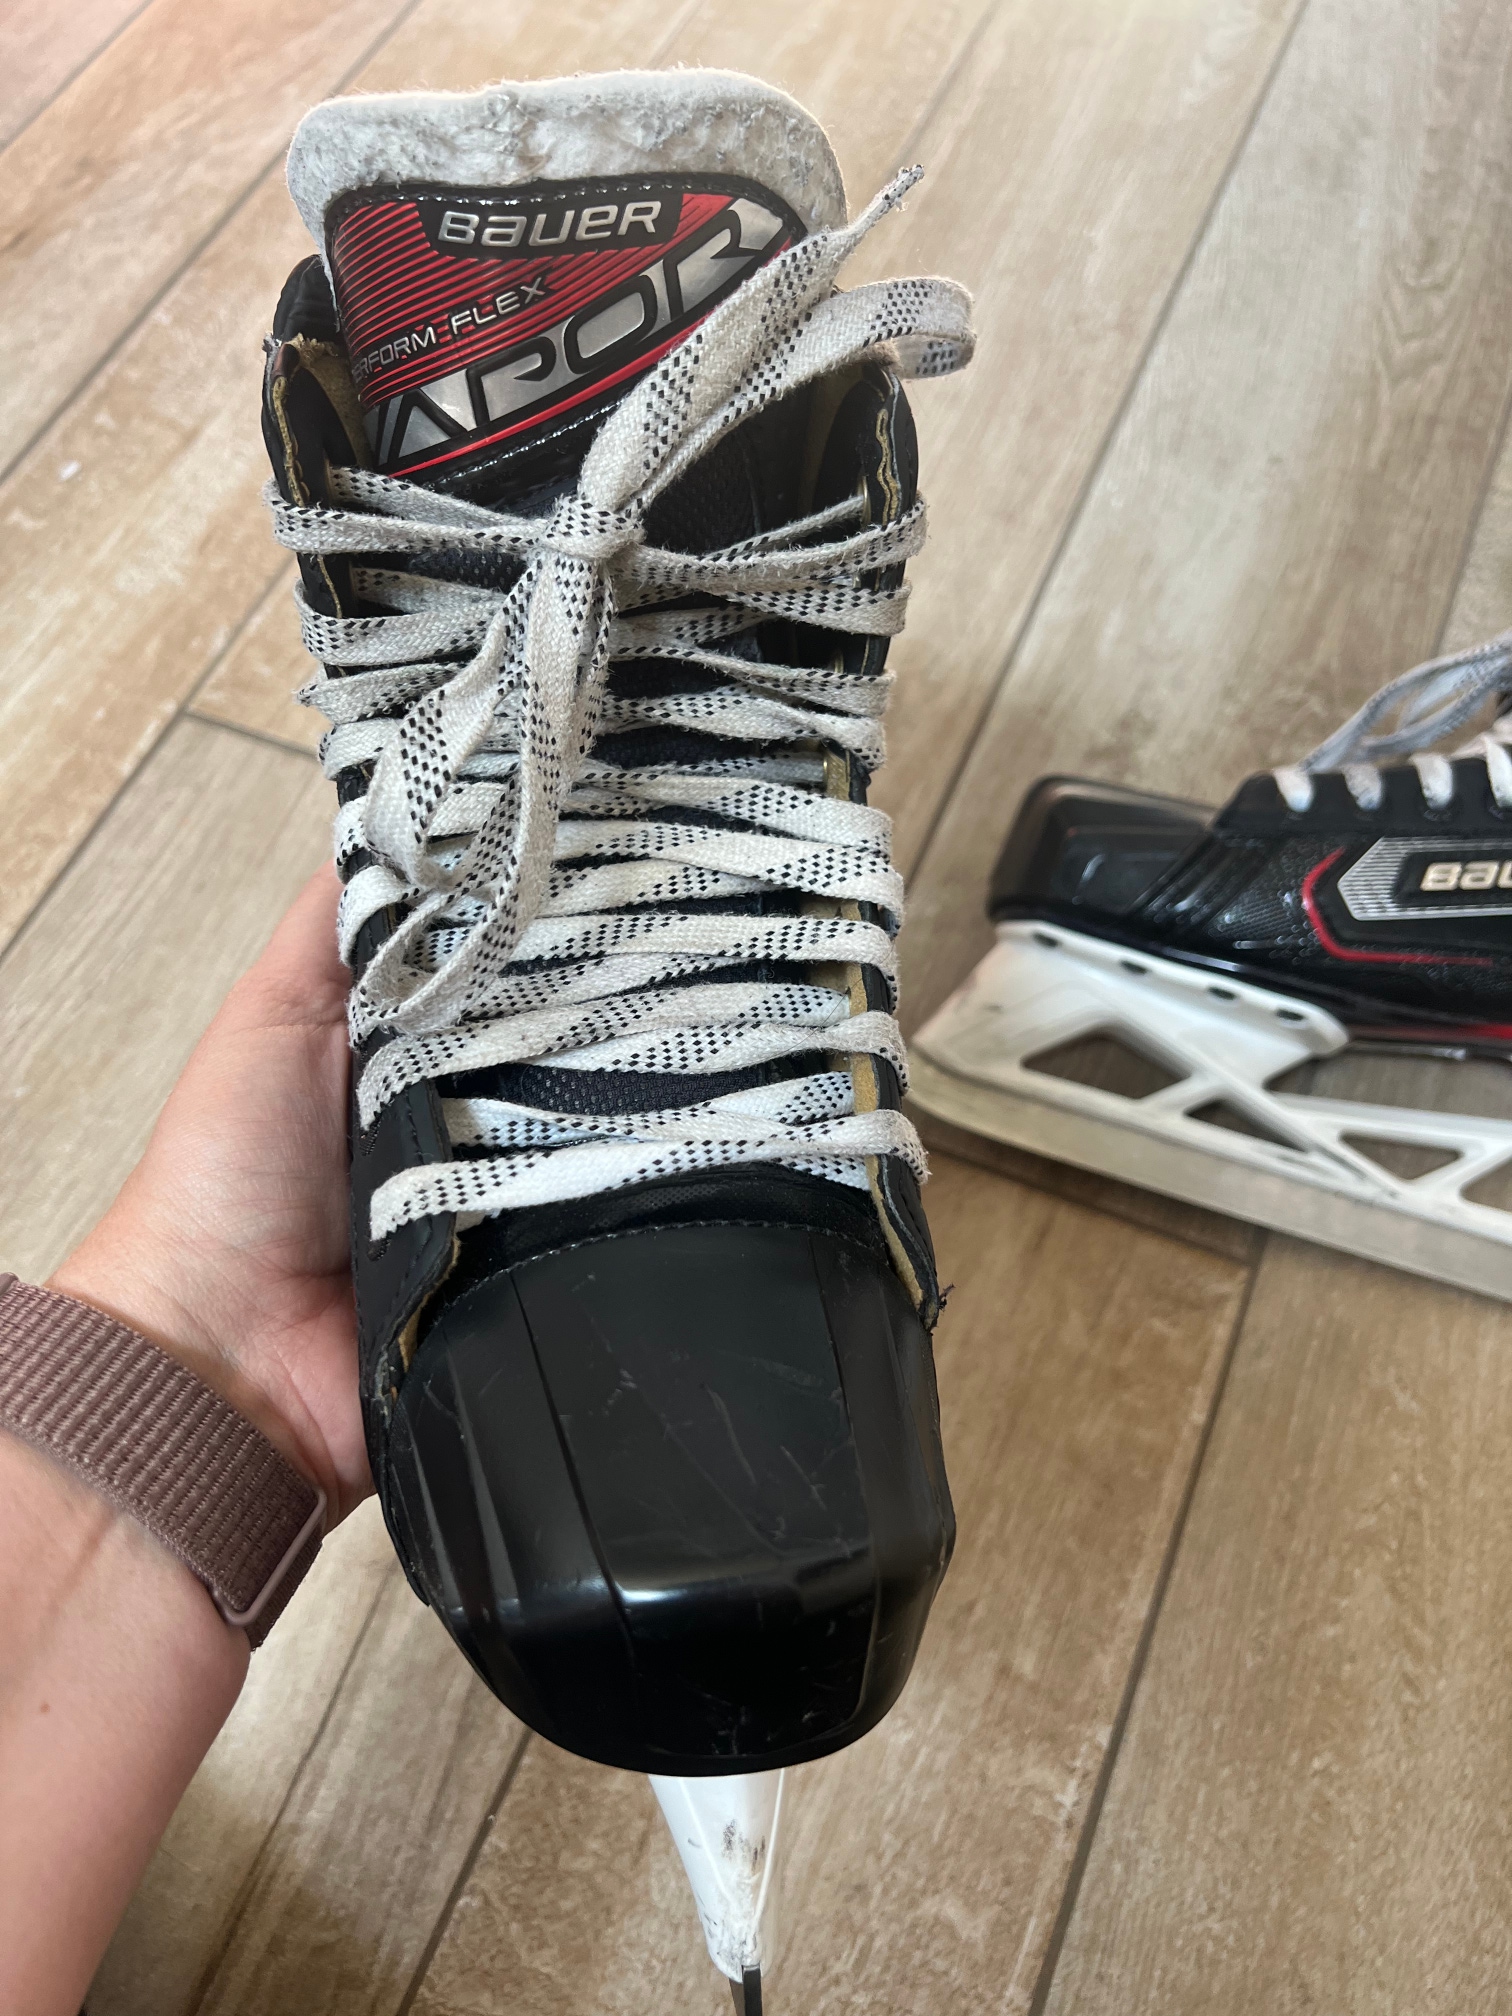 Senior Used (excellent condition) Bauer Vapor X2.9 Hockey Goalie Skates Regular Width Size 7